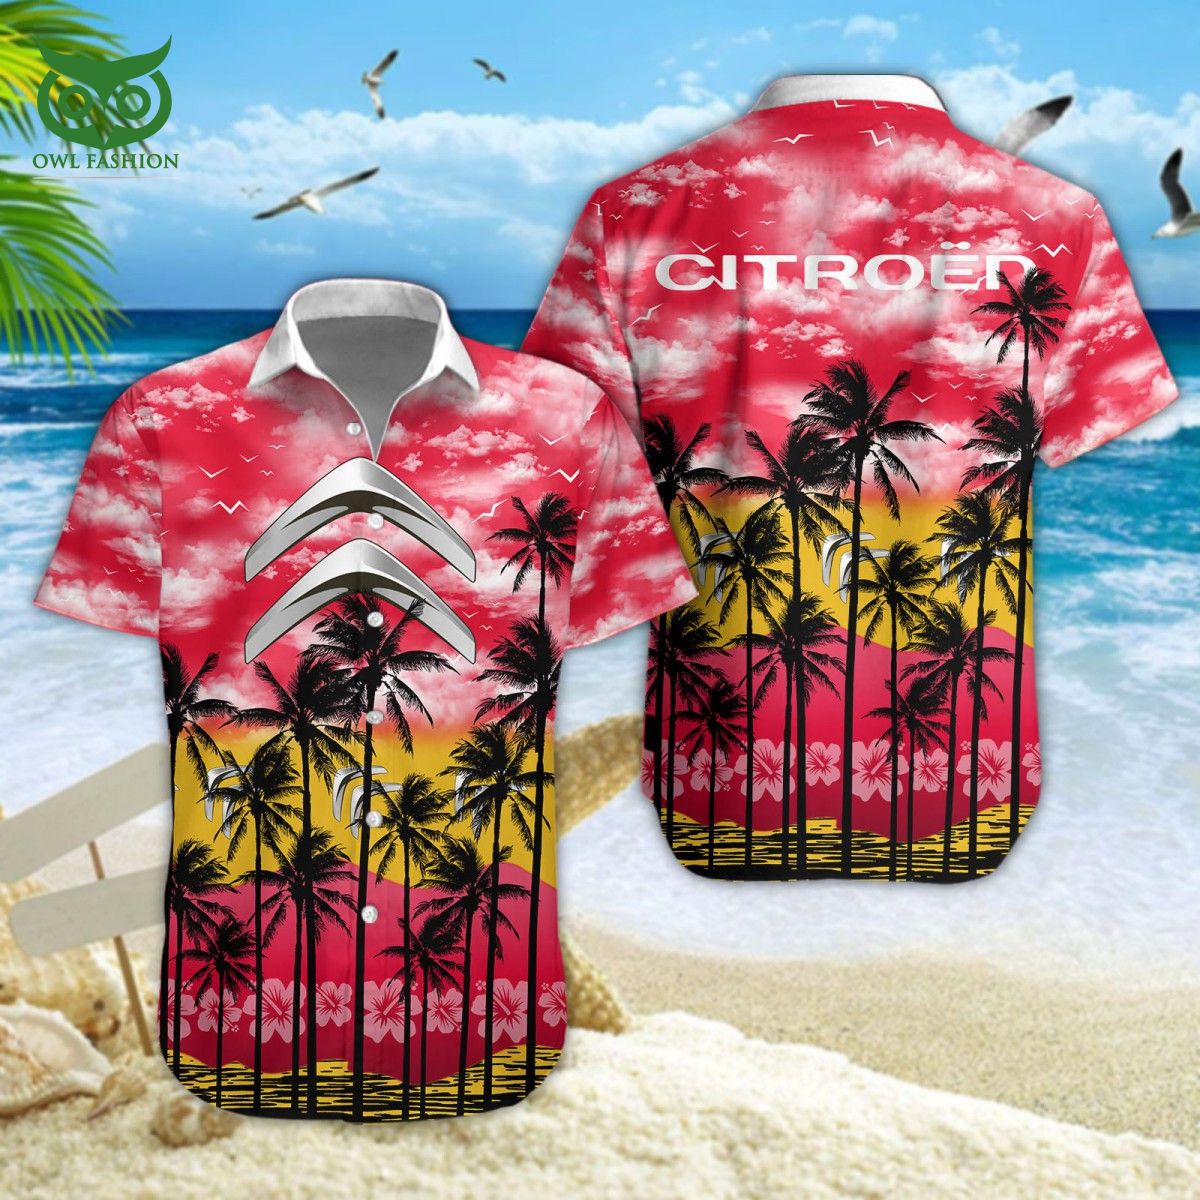 Citroen Luxury Car Brand Hawaiian Shirt Short Impressive picture.